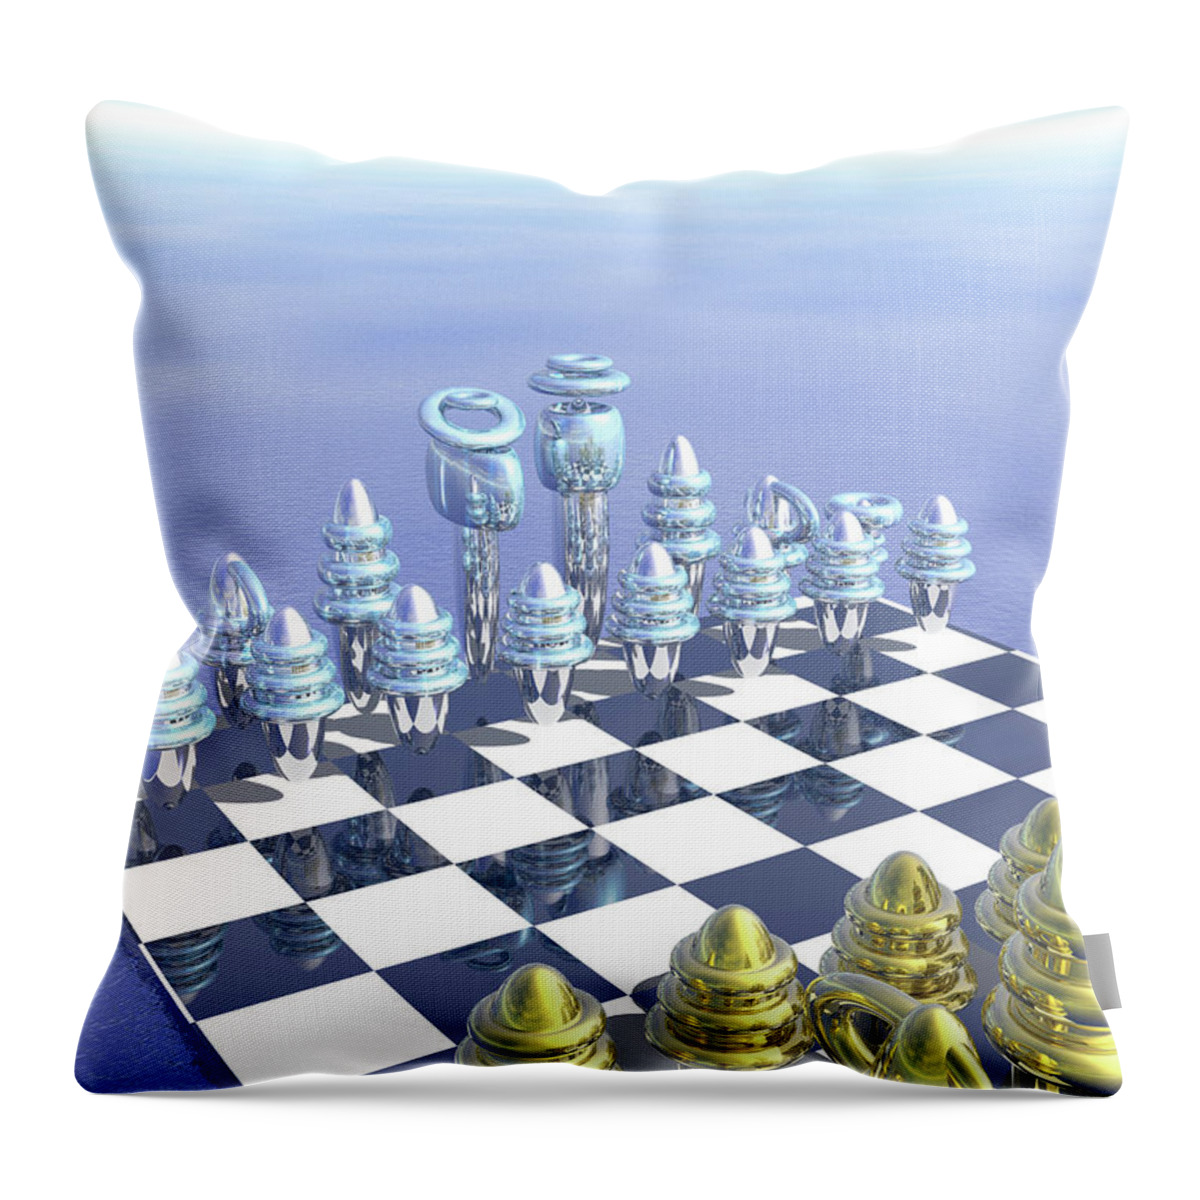 Chess Throw Pillow featuring the digital art Chess Set by Bernie Sirelson